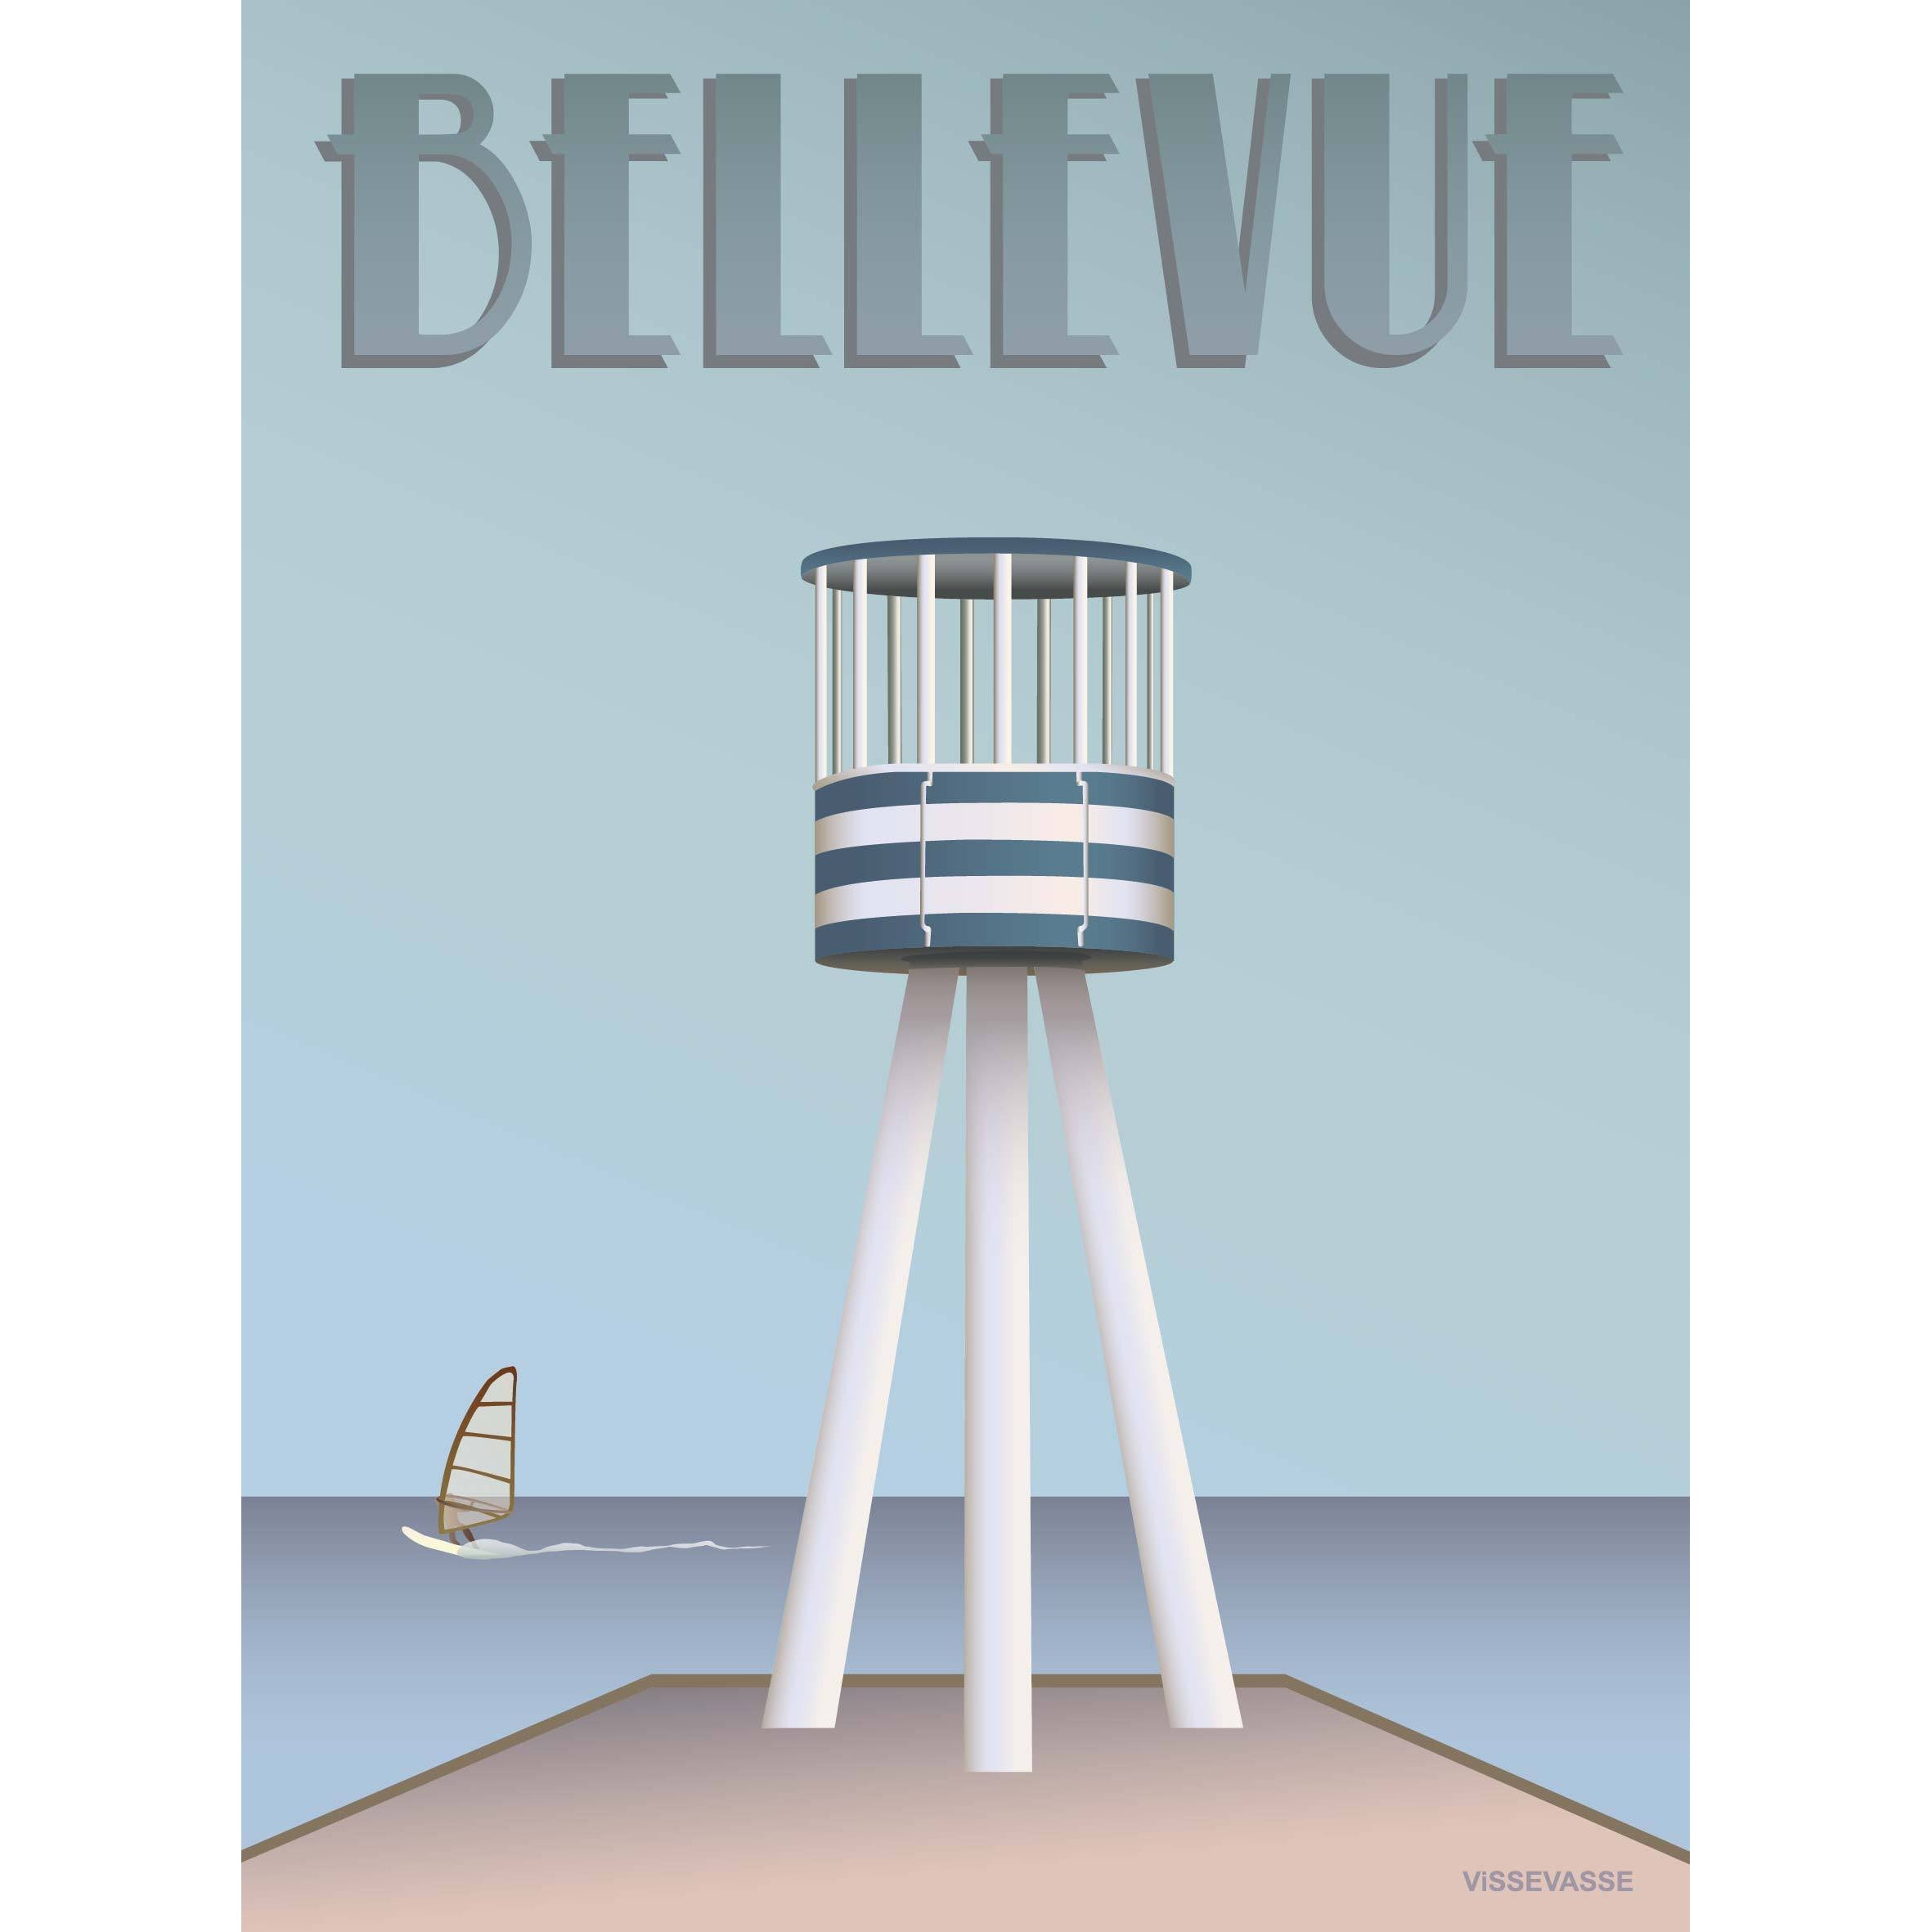 Vissevasse Bellevue Lifeguard Tower -juliste, 15 x21 cm